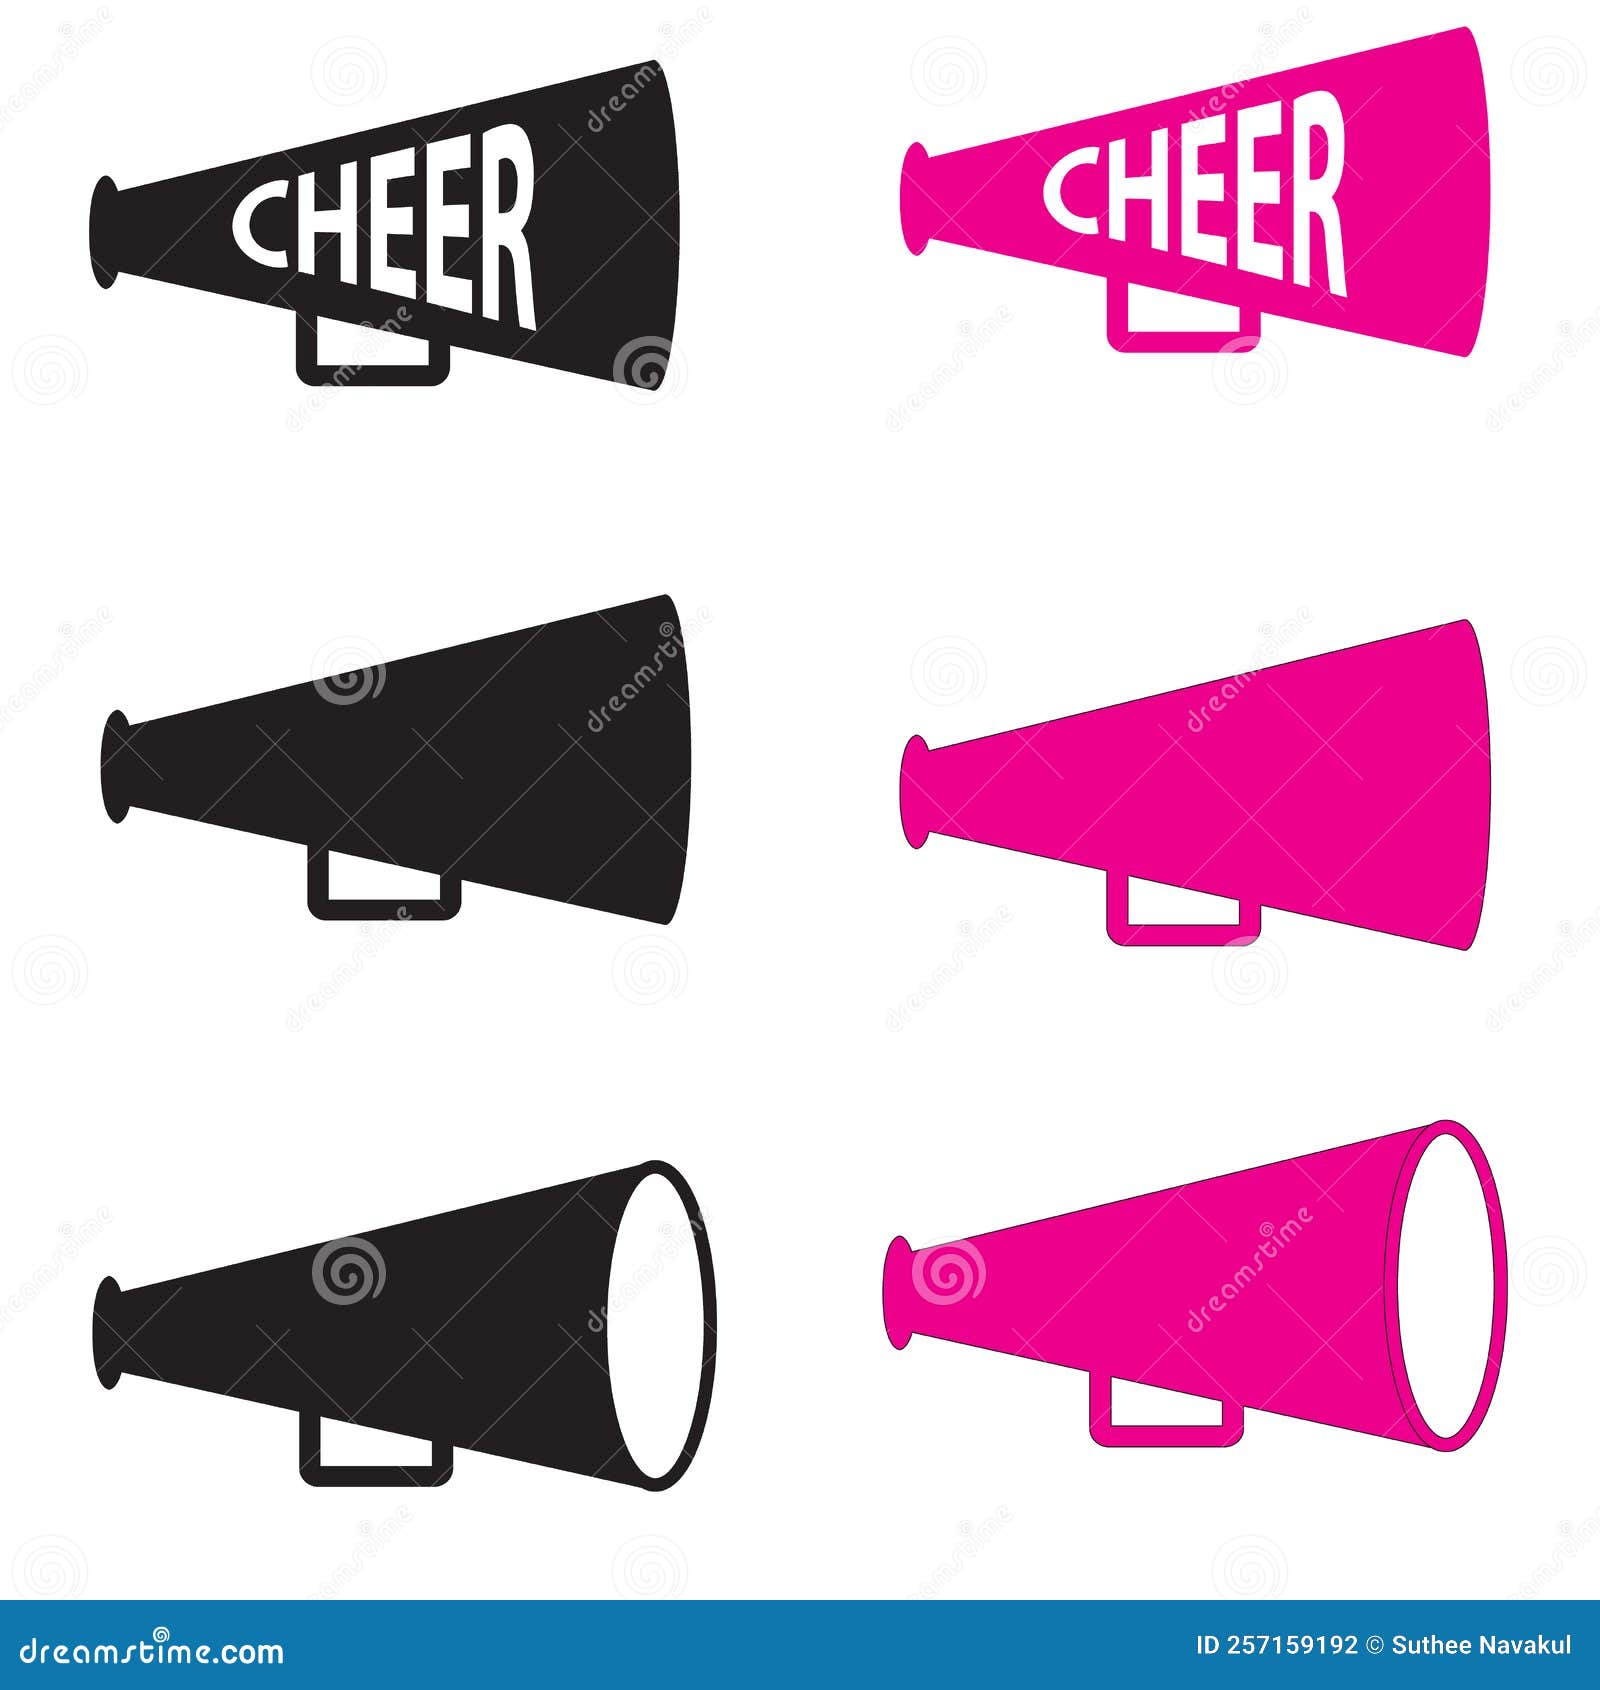 cheers megaphone icon on white background. bullhorn sign. cheerleader . cheer pom pom logo. flat style